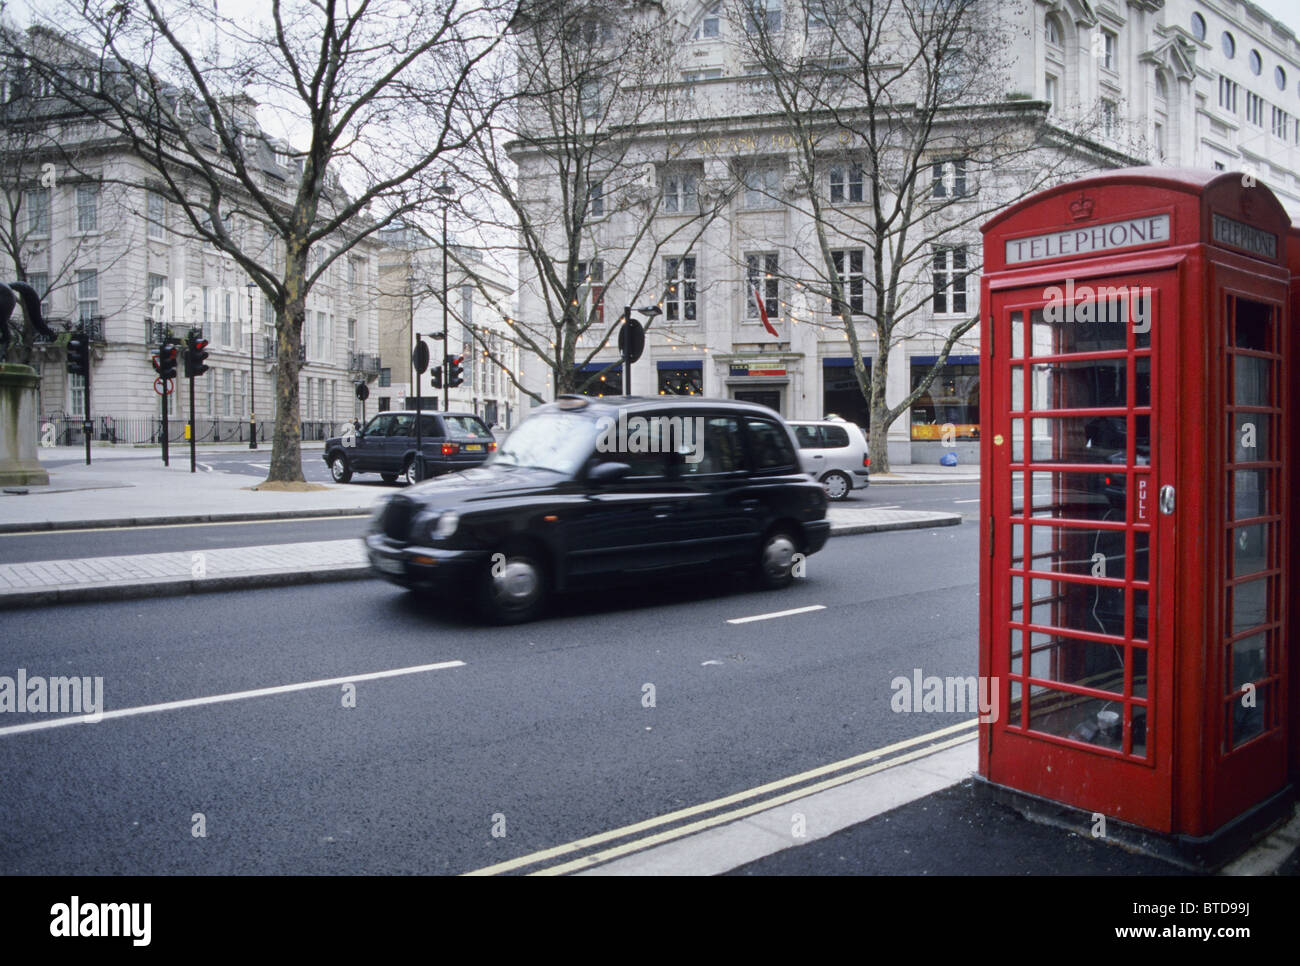 Schwarzes Taxi Taxi vorbeifahren eine rote Telefonzelle, London, England Stockfoto